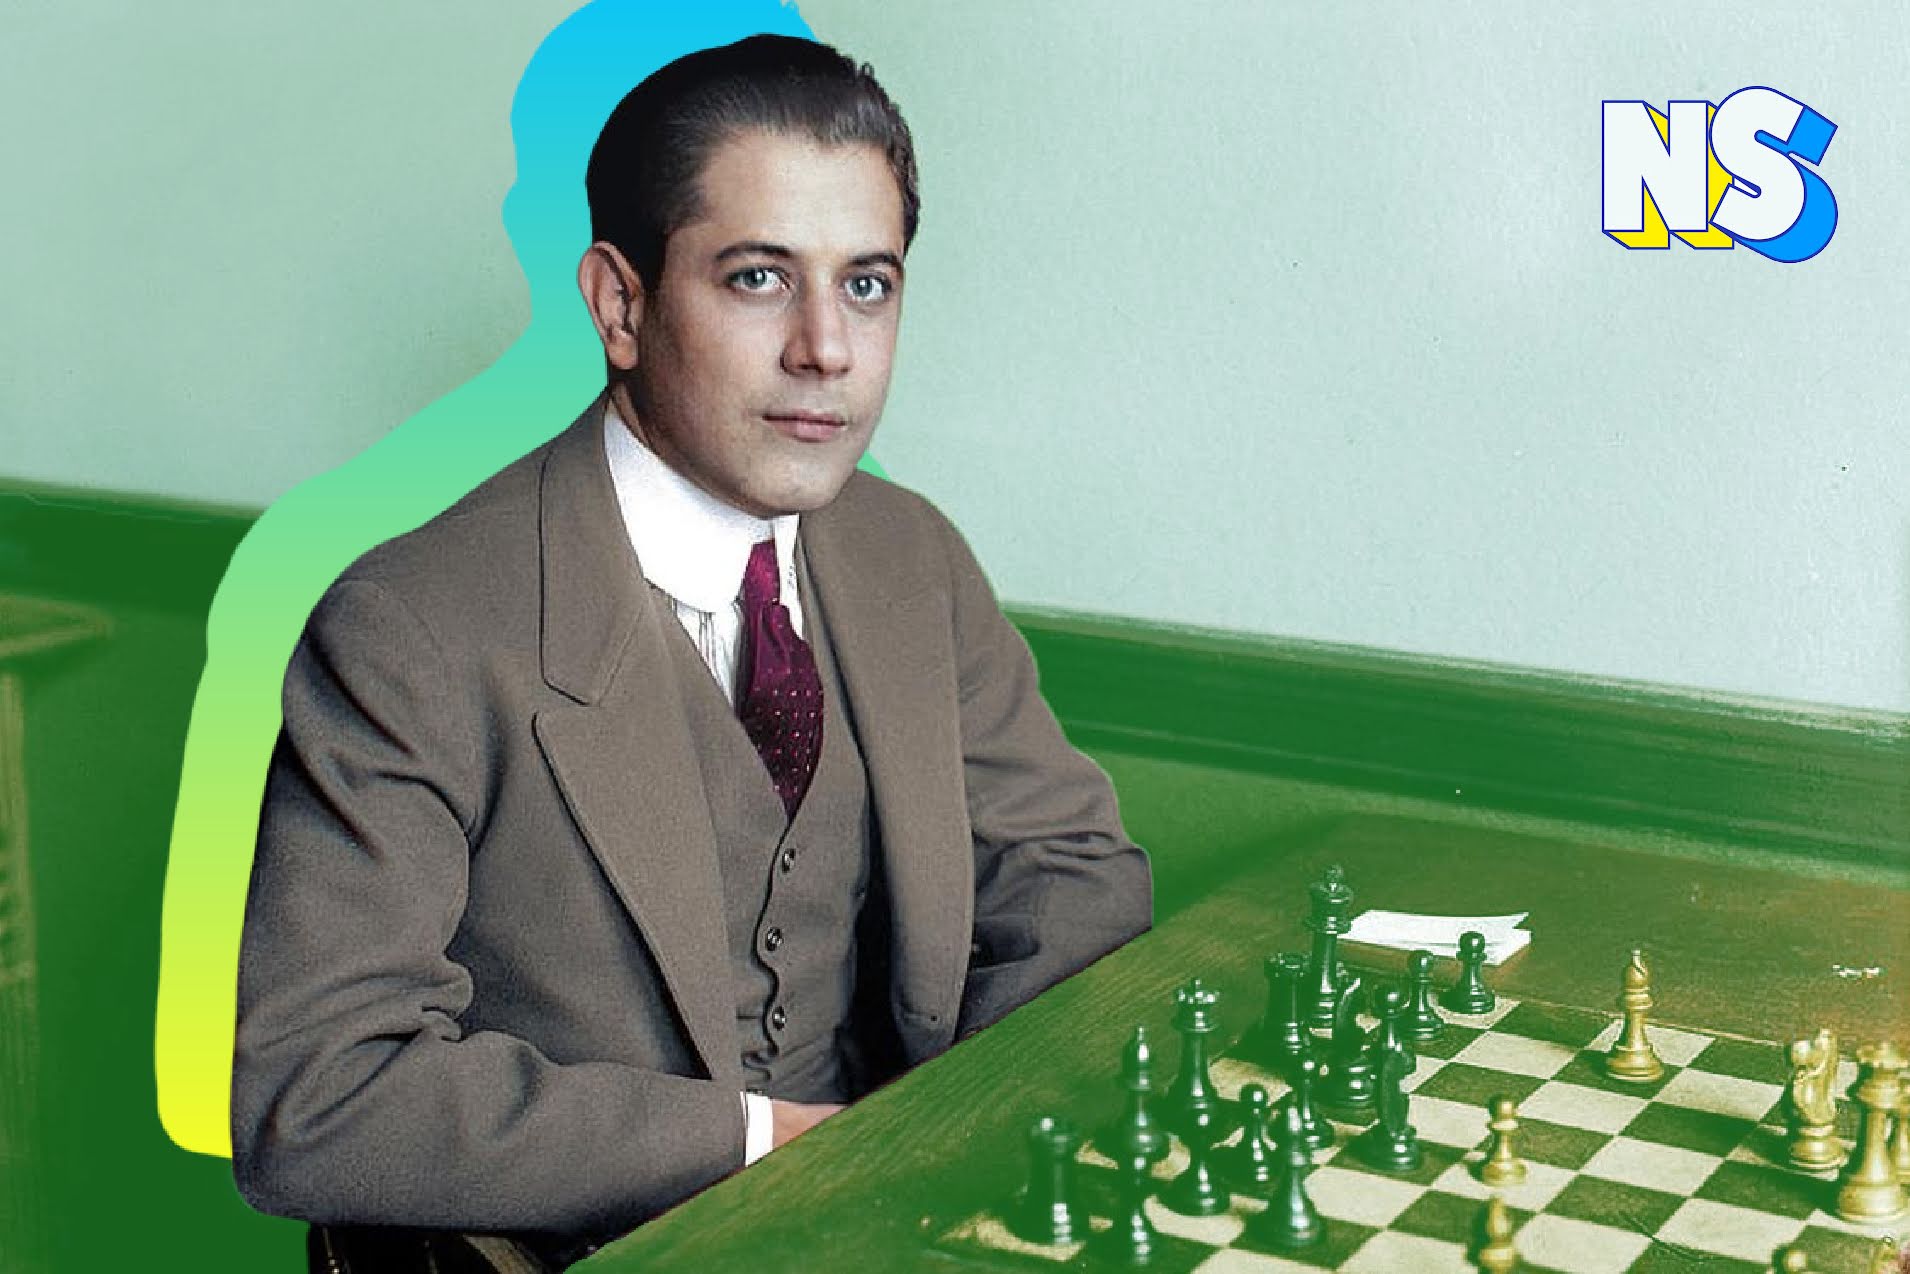 Ruy Lopez de Segura  Top Chess Players 